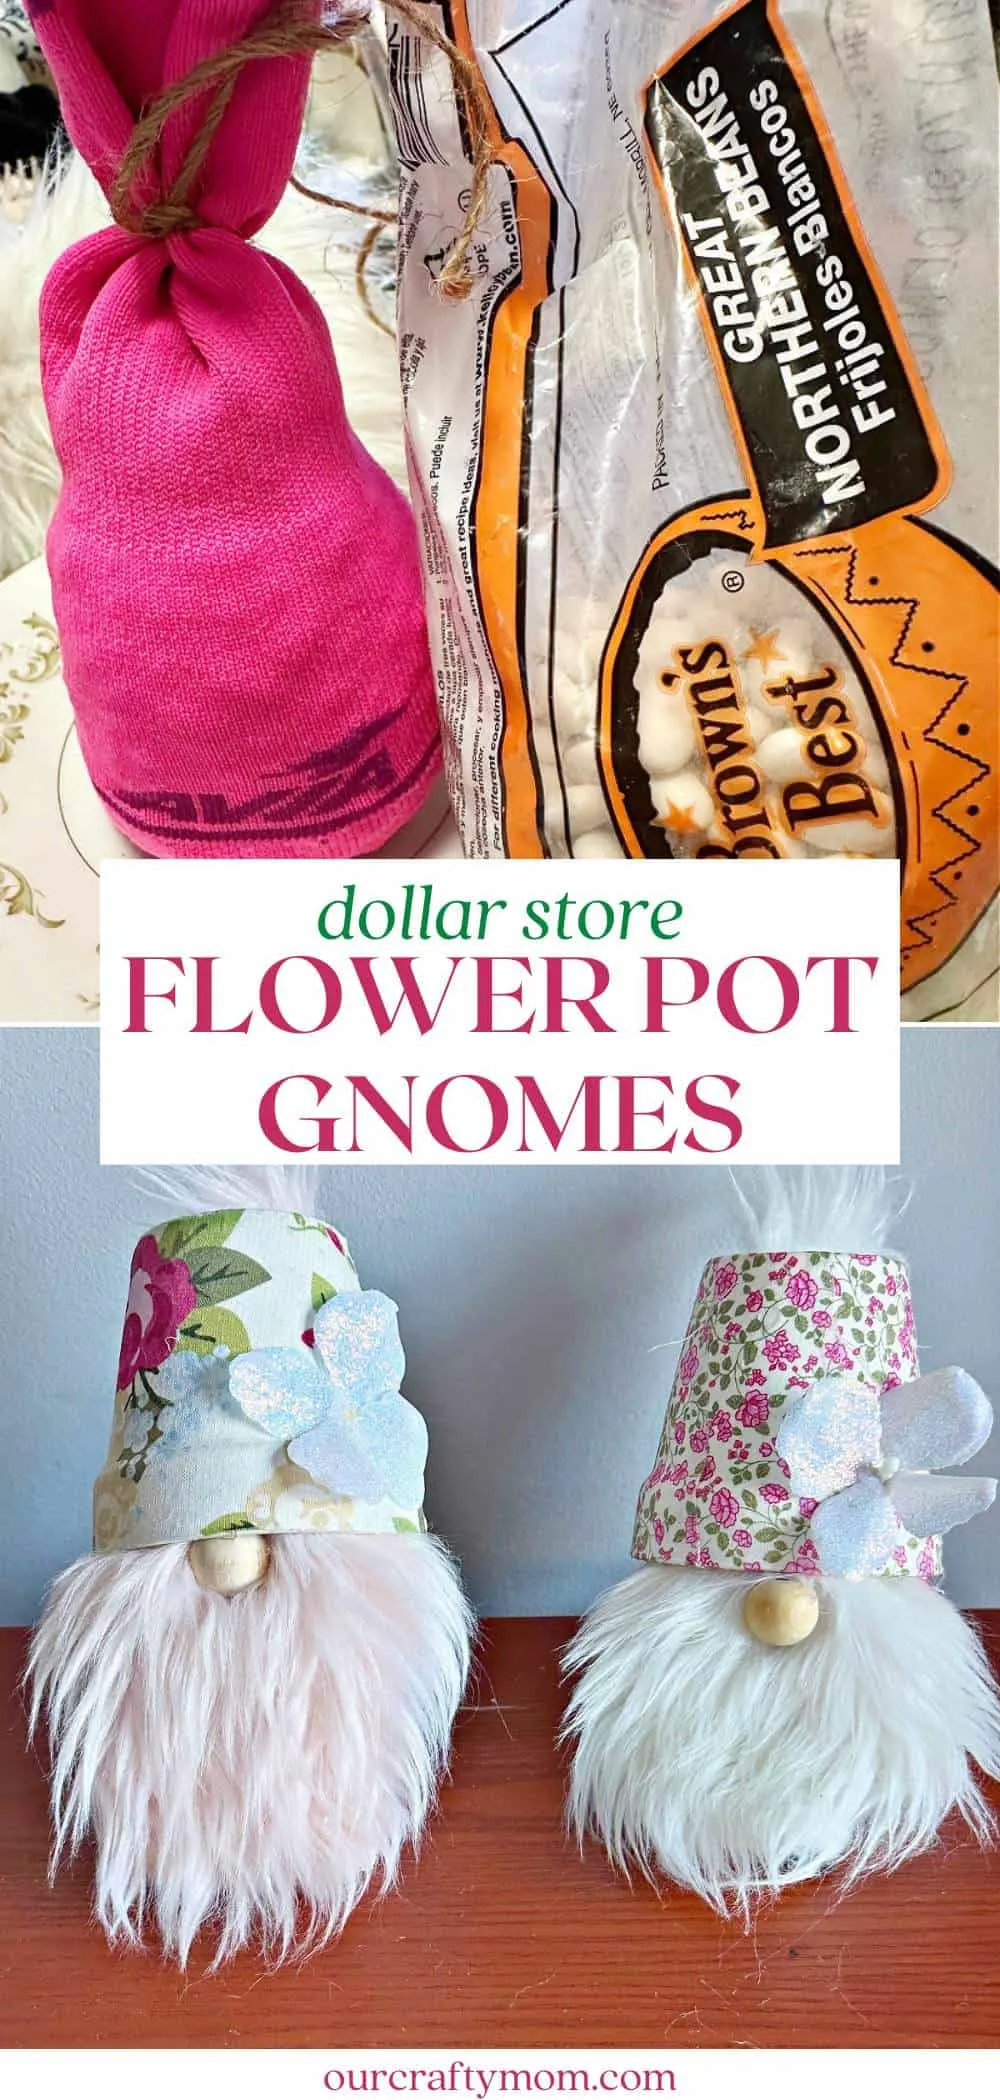 flower pot gnome supplies.